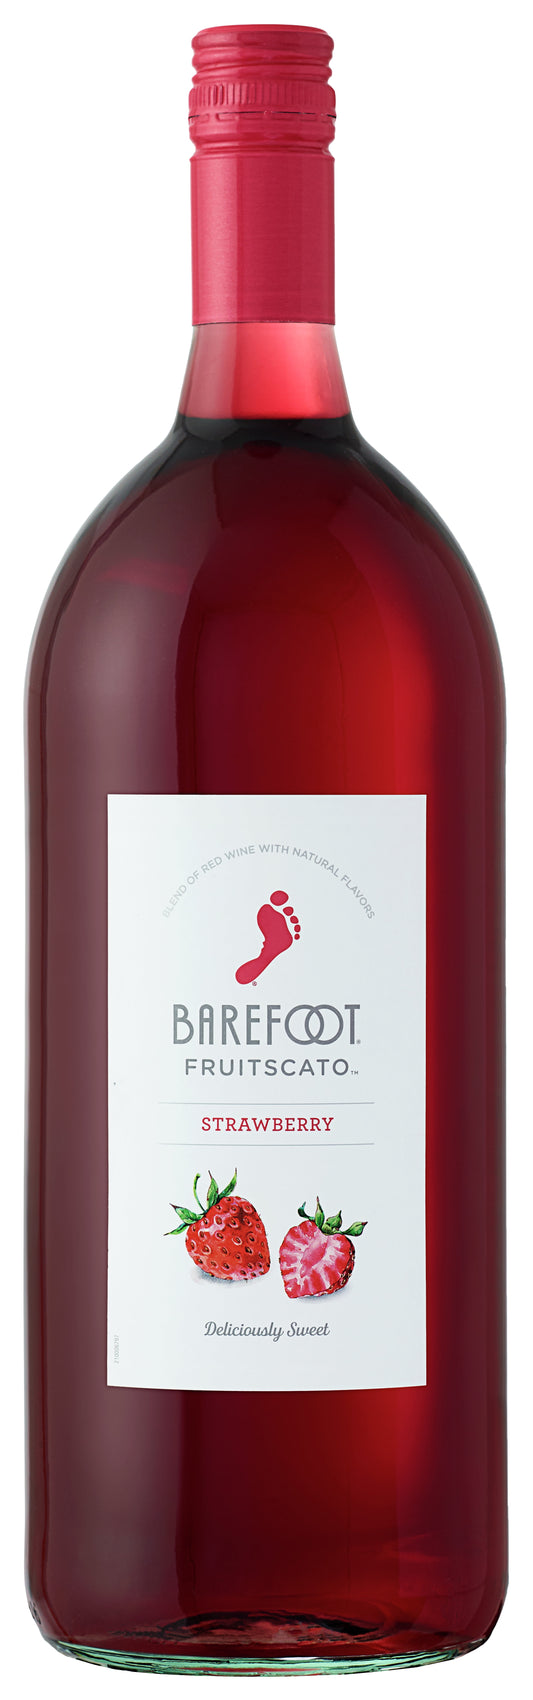 Barefoot FruitScato Strawberry Moscato, California, 1.5 Liter Glass Bottle